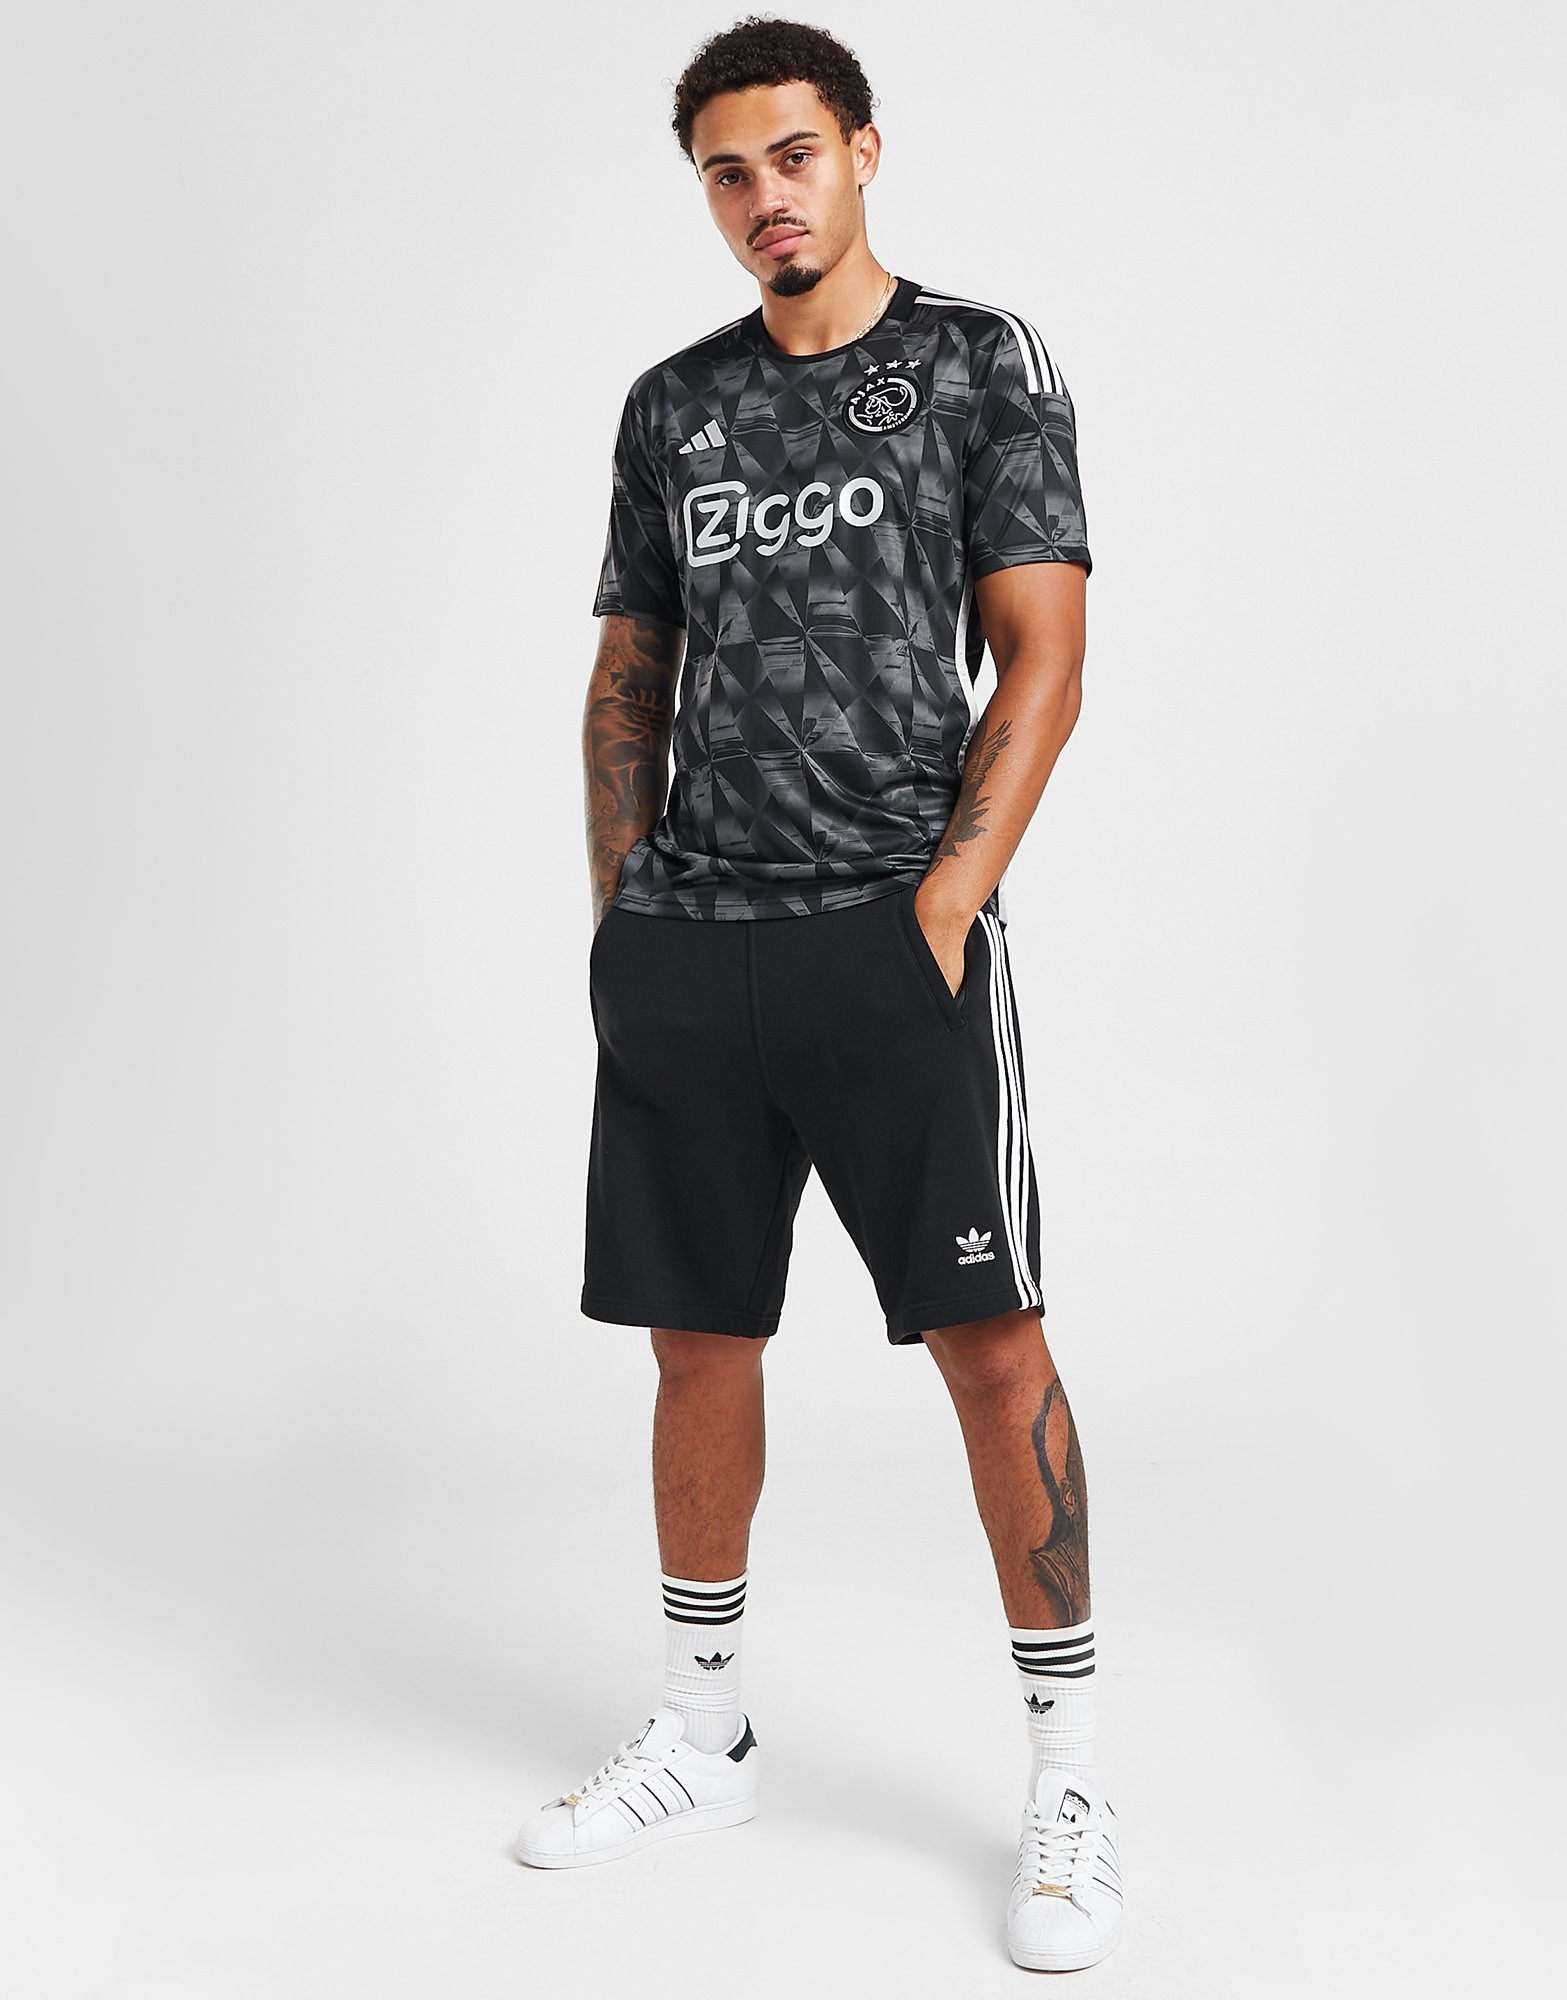 Adidas 23-24 Ajax Replica Away Jersey White Size Men's XL